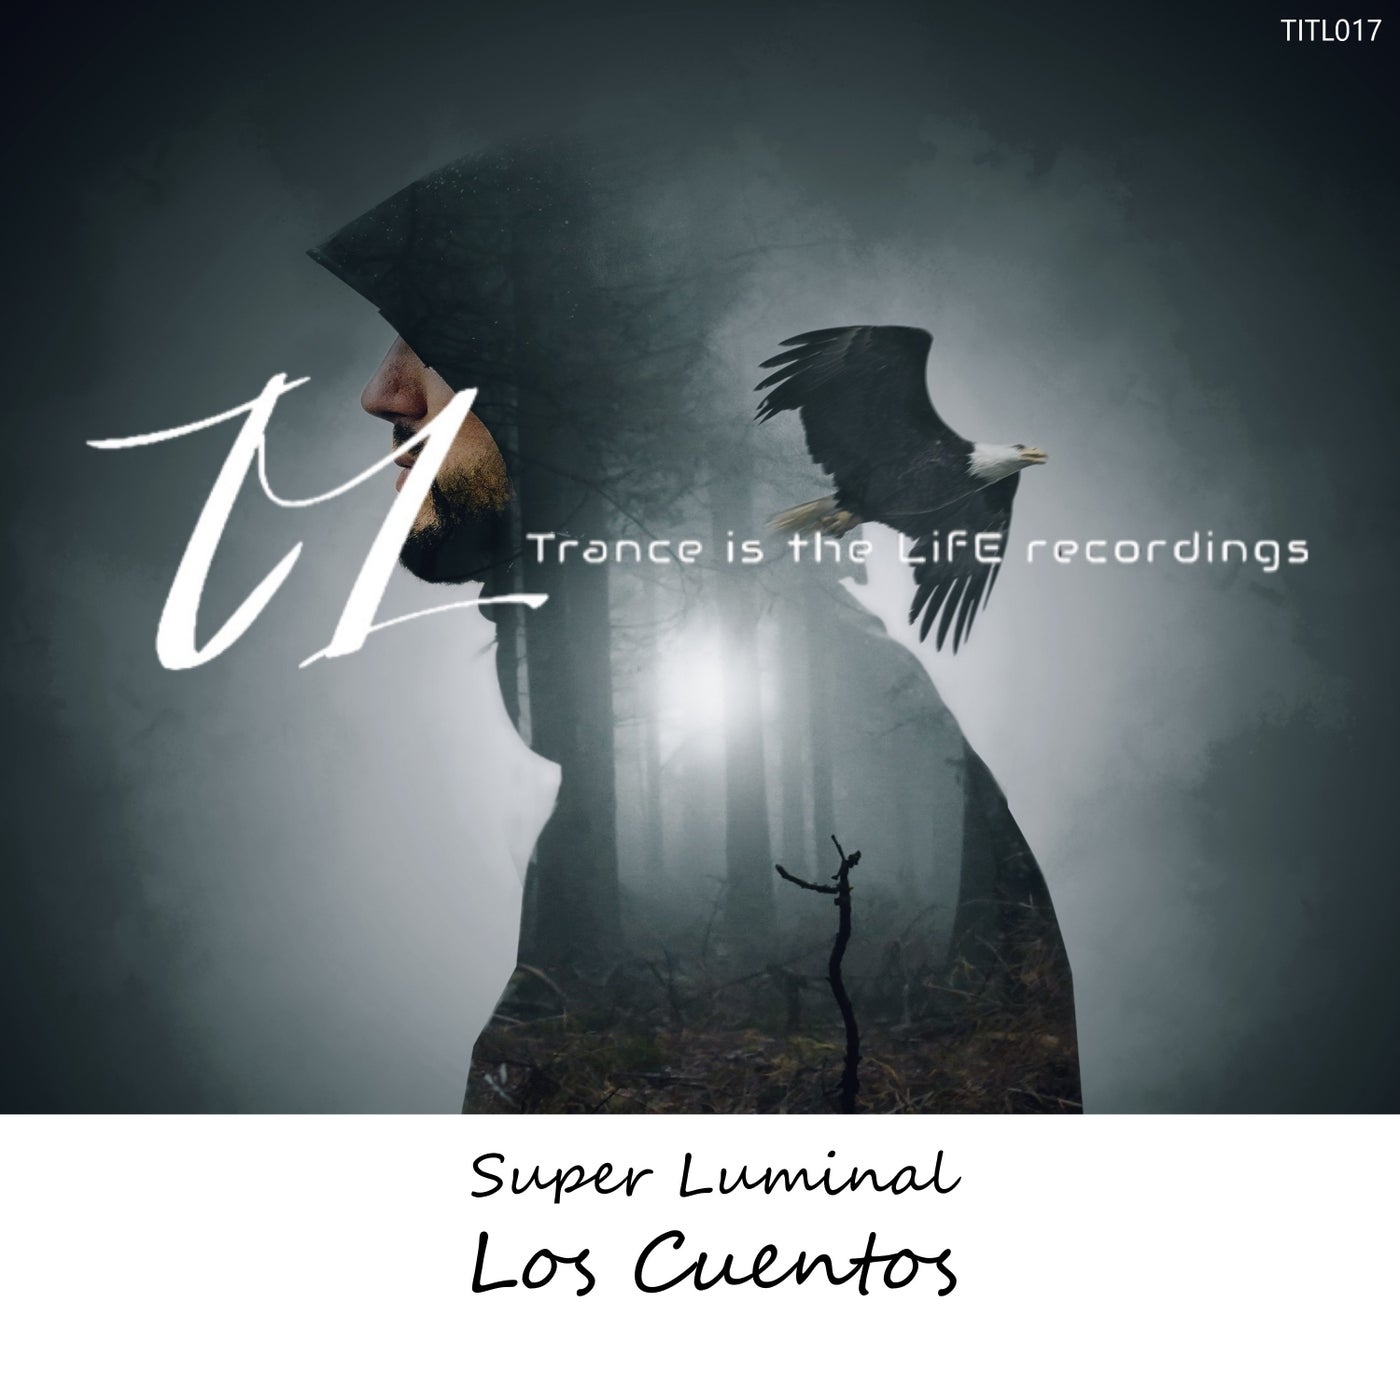 Los Cuentos (Original Mix) by Super Luminal on Beatport